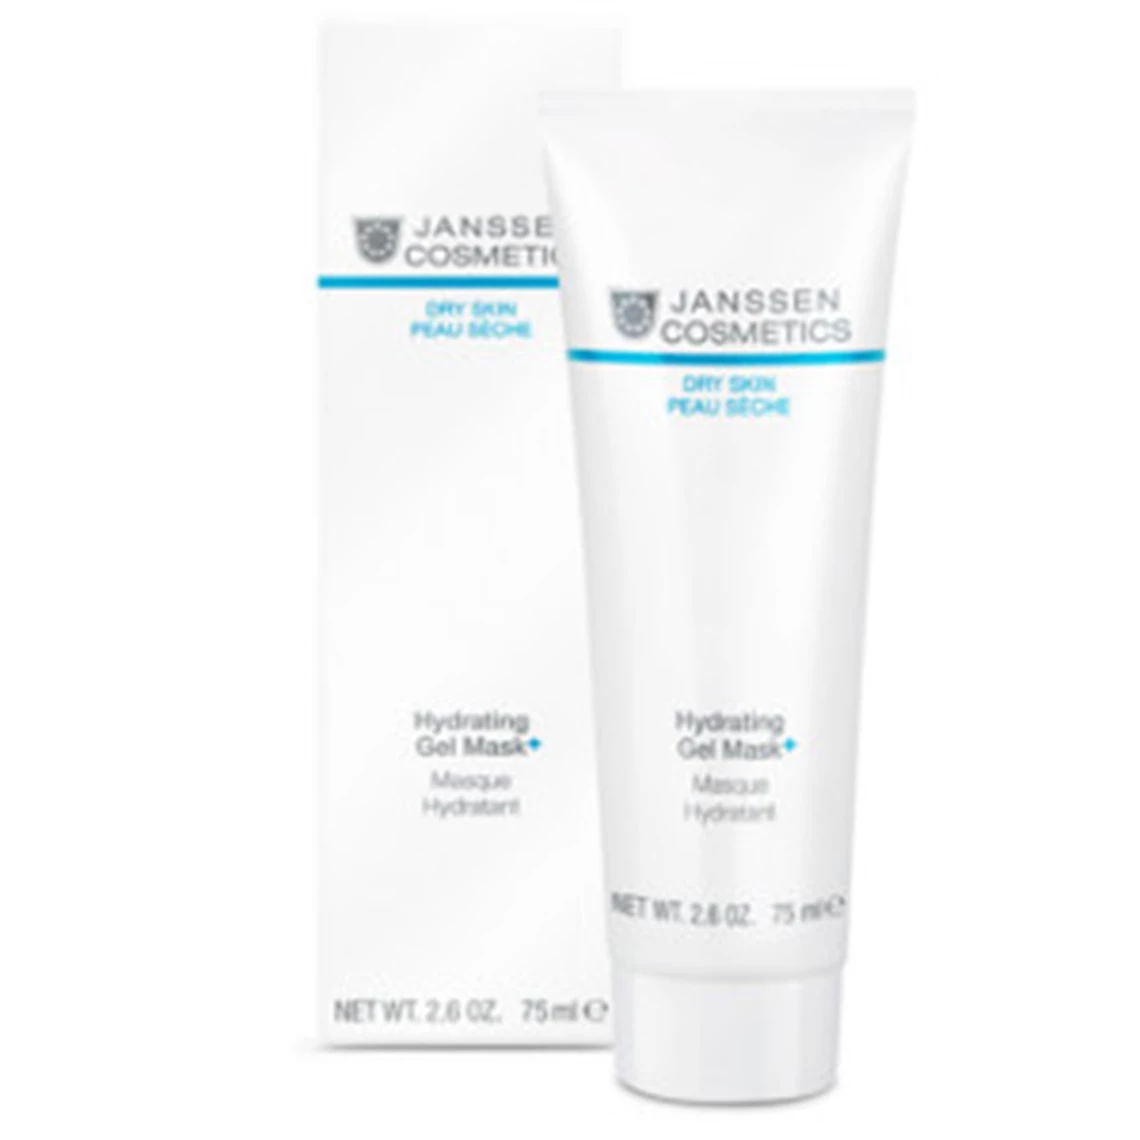 Hydrating Gel Mask Plus by Janssen Cosmetics